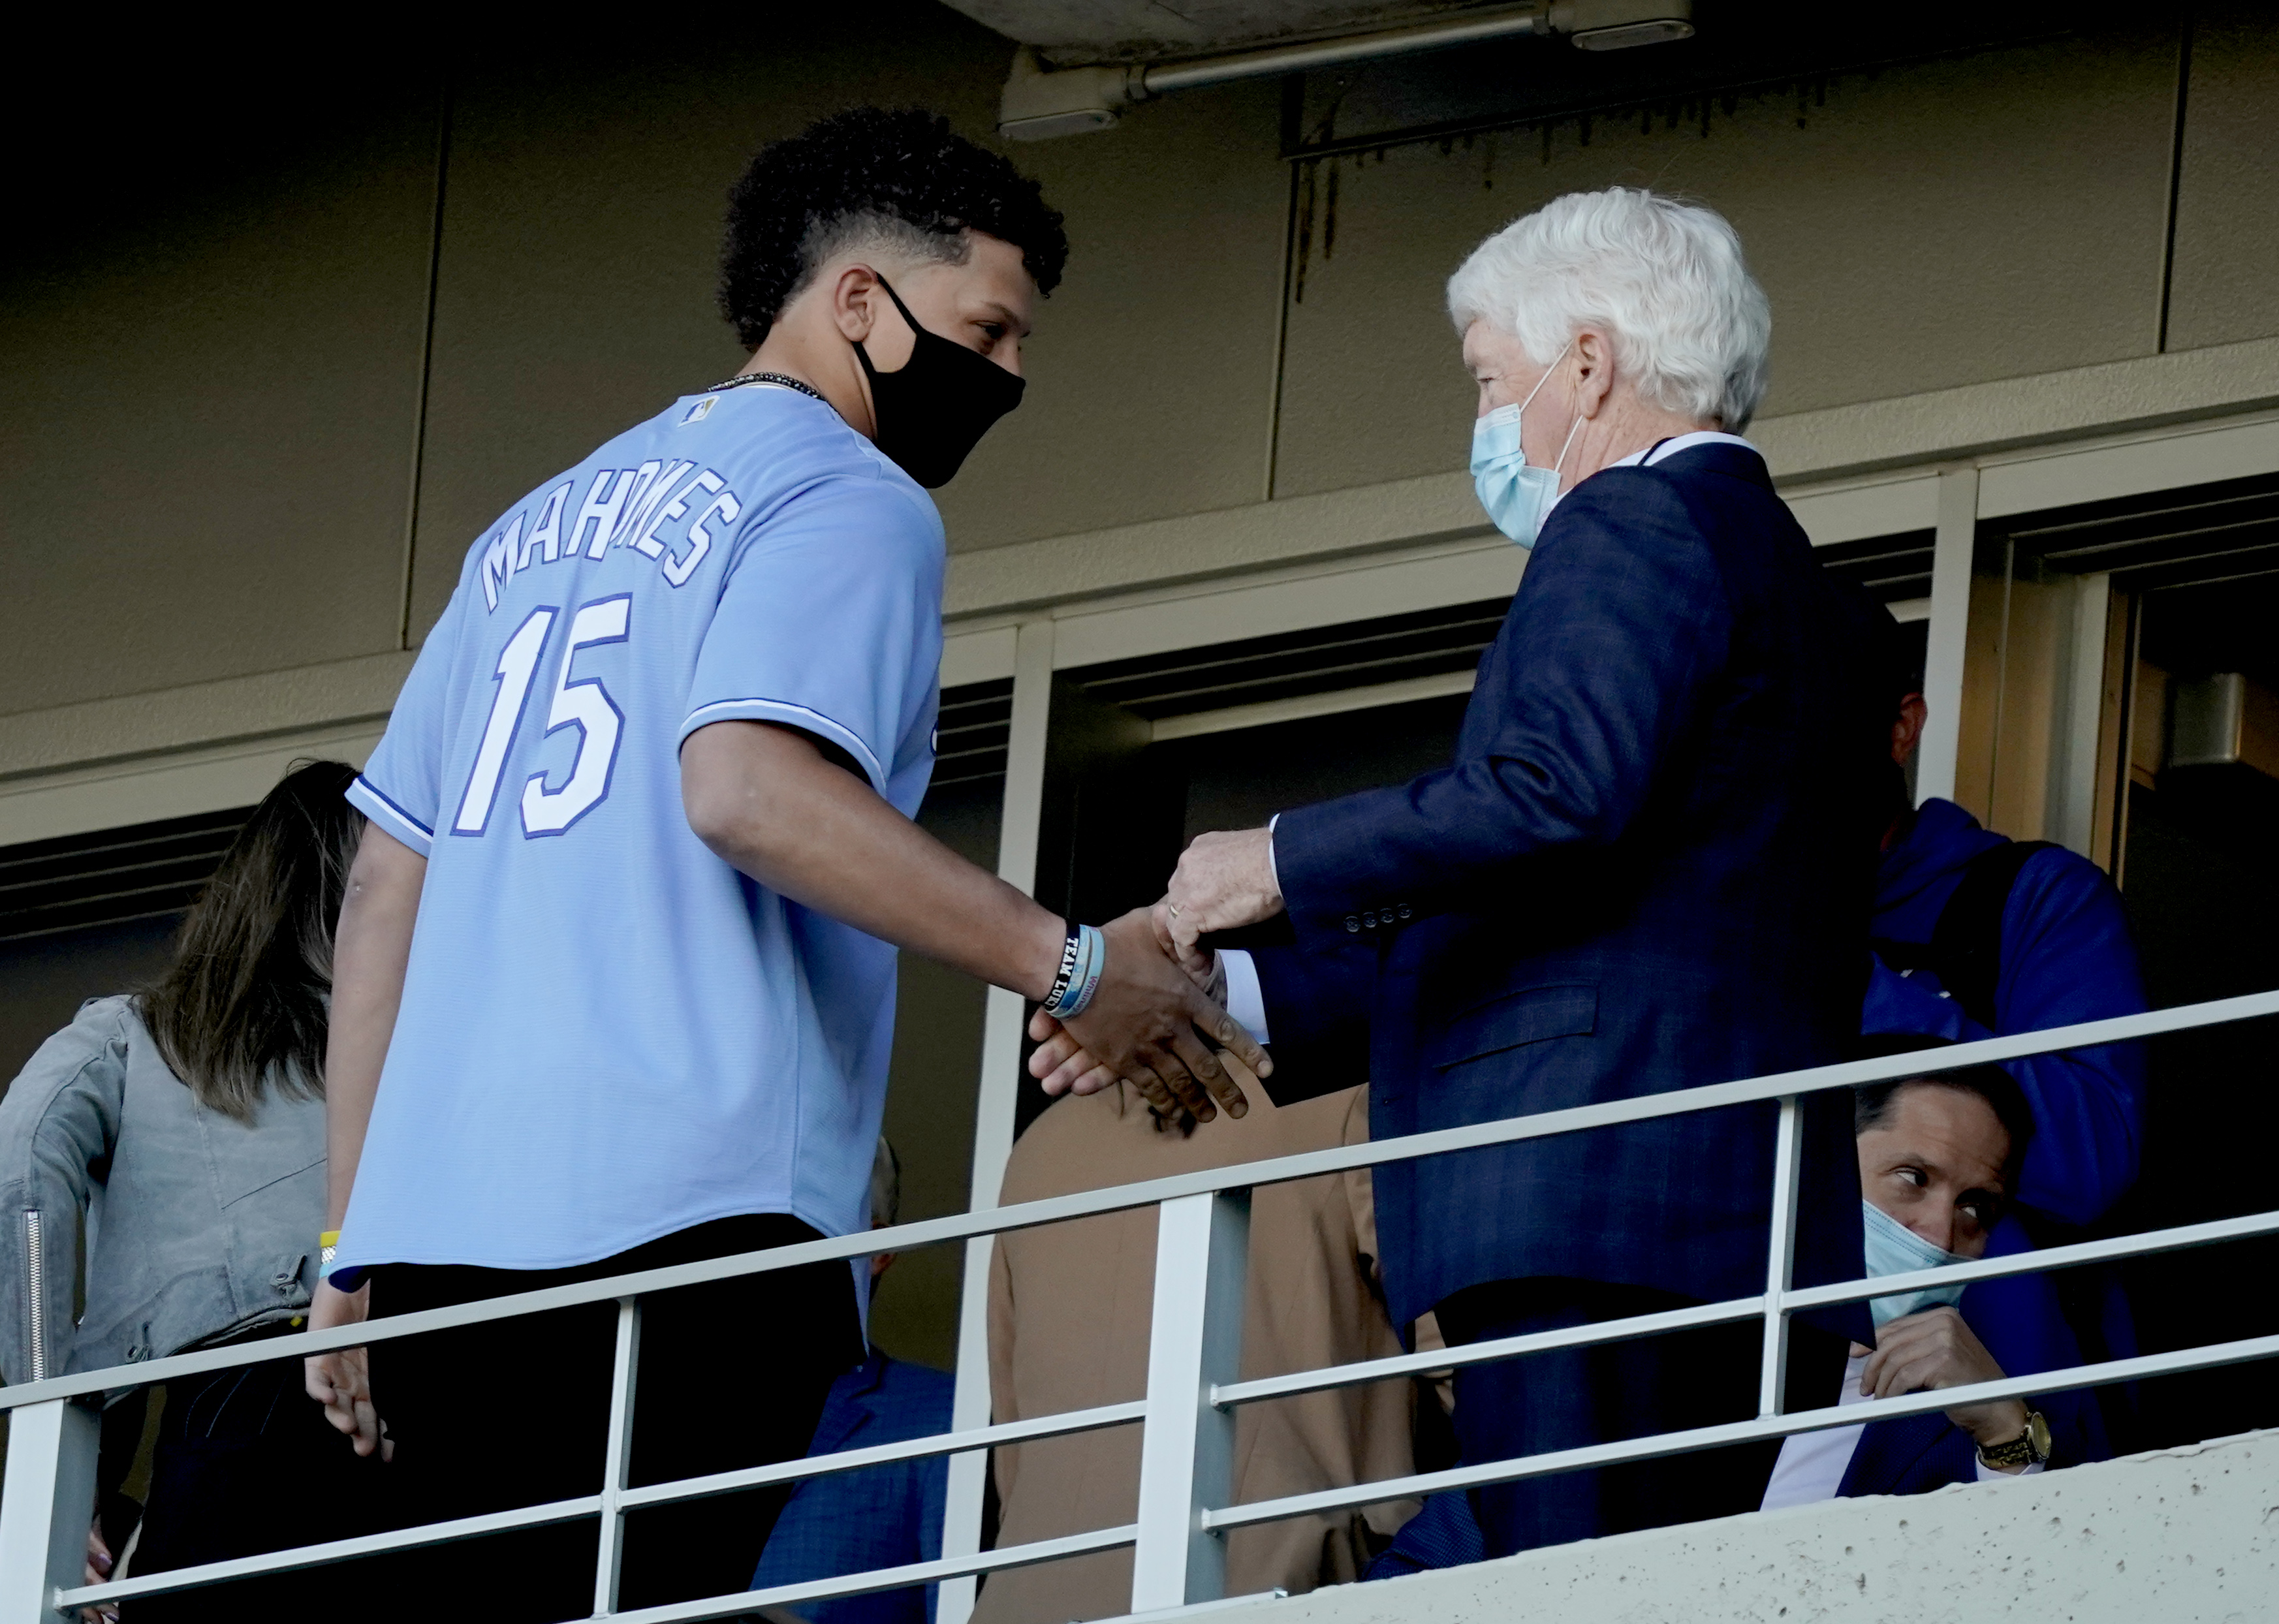 Co-owners of the Royals, Patrick Mahomes and John Sherman shake hands